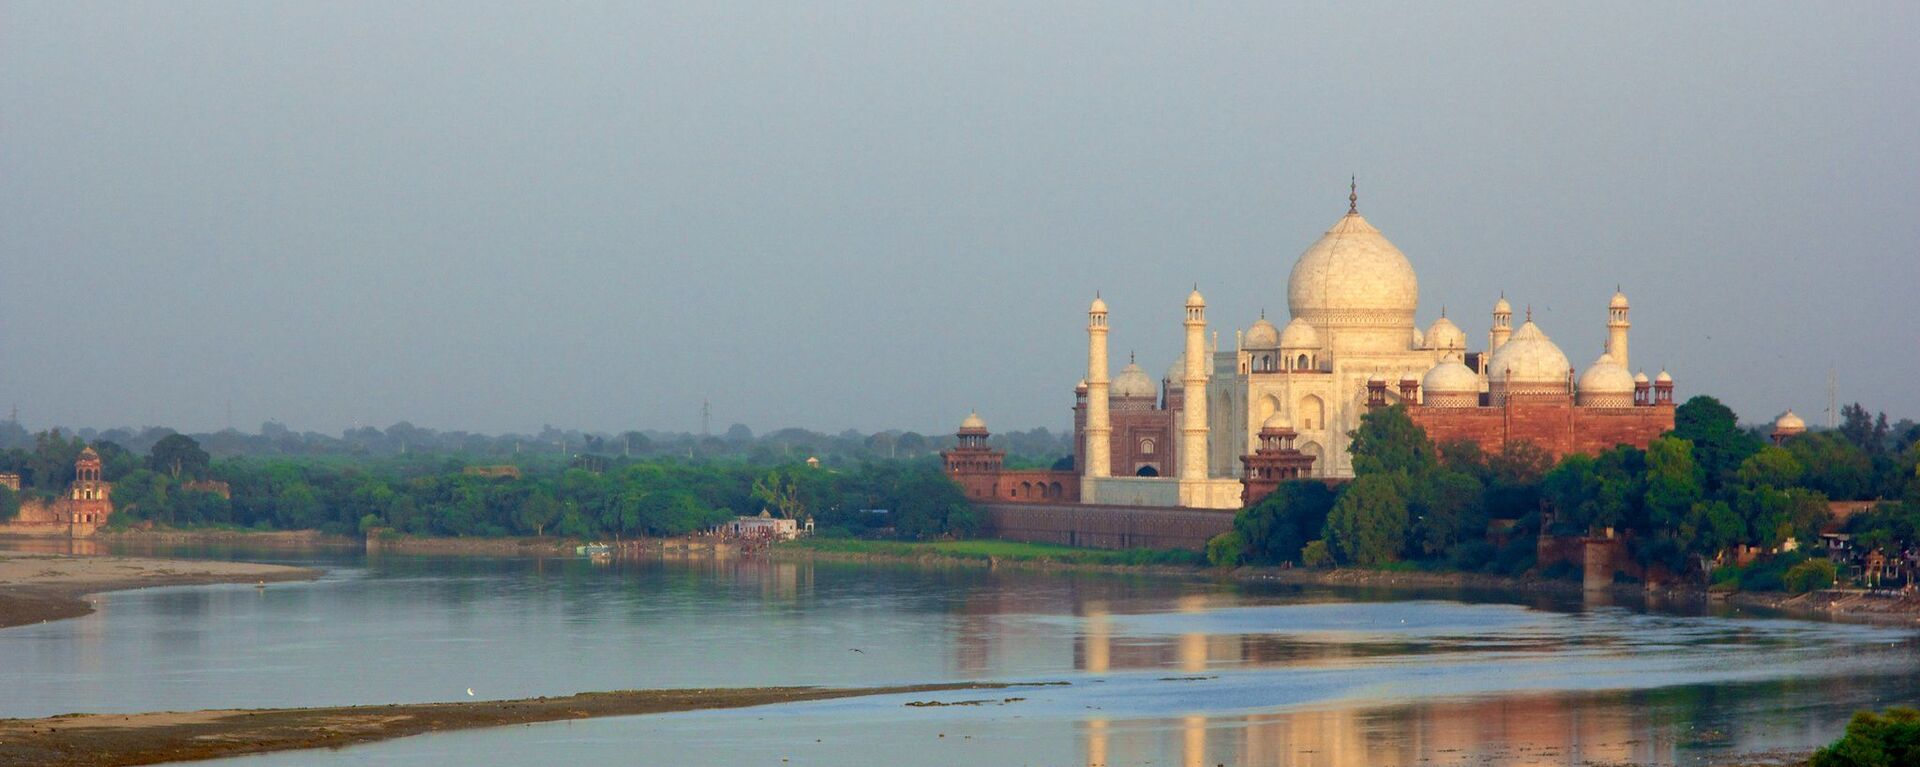 Taj Mahal on the banks of the Yamuna River - Sputnik International, 1920, 25.06.2021